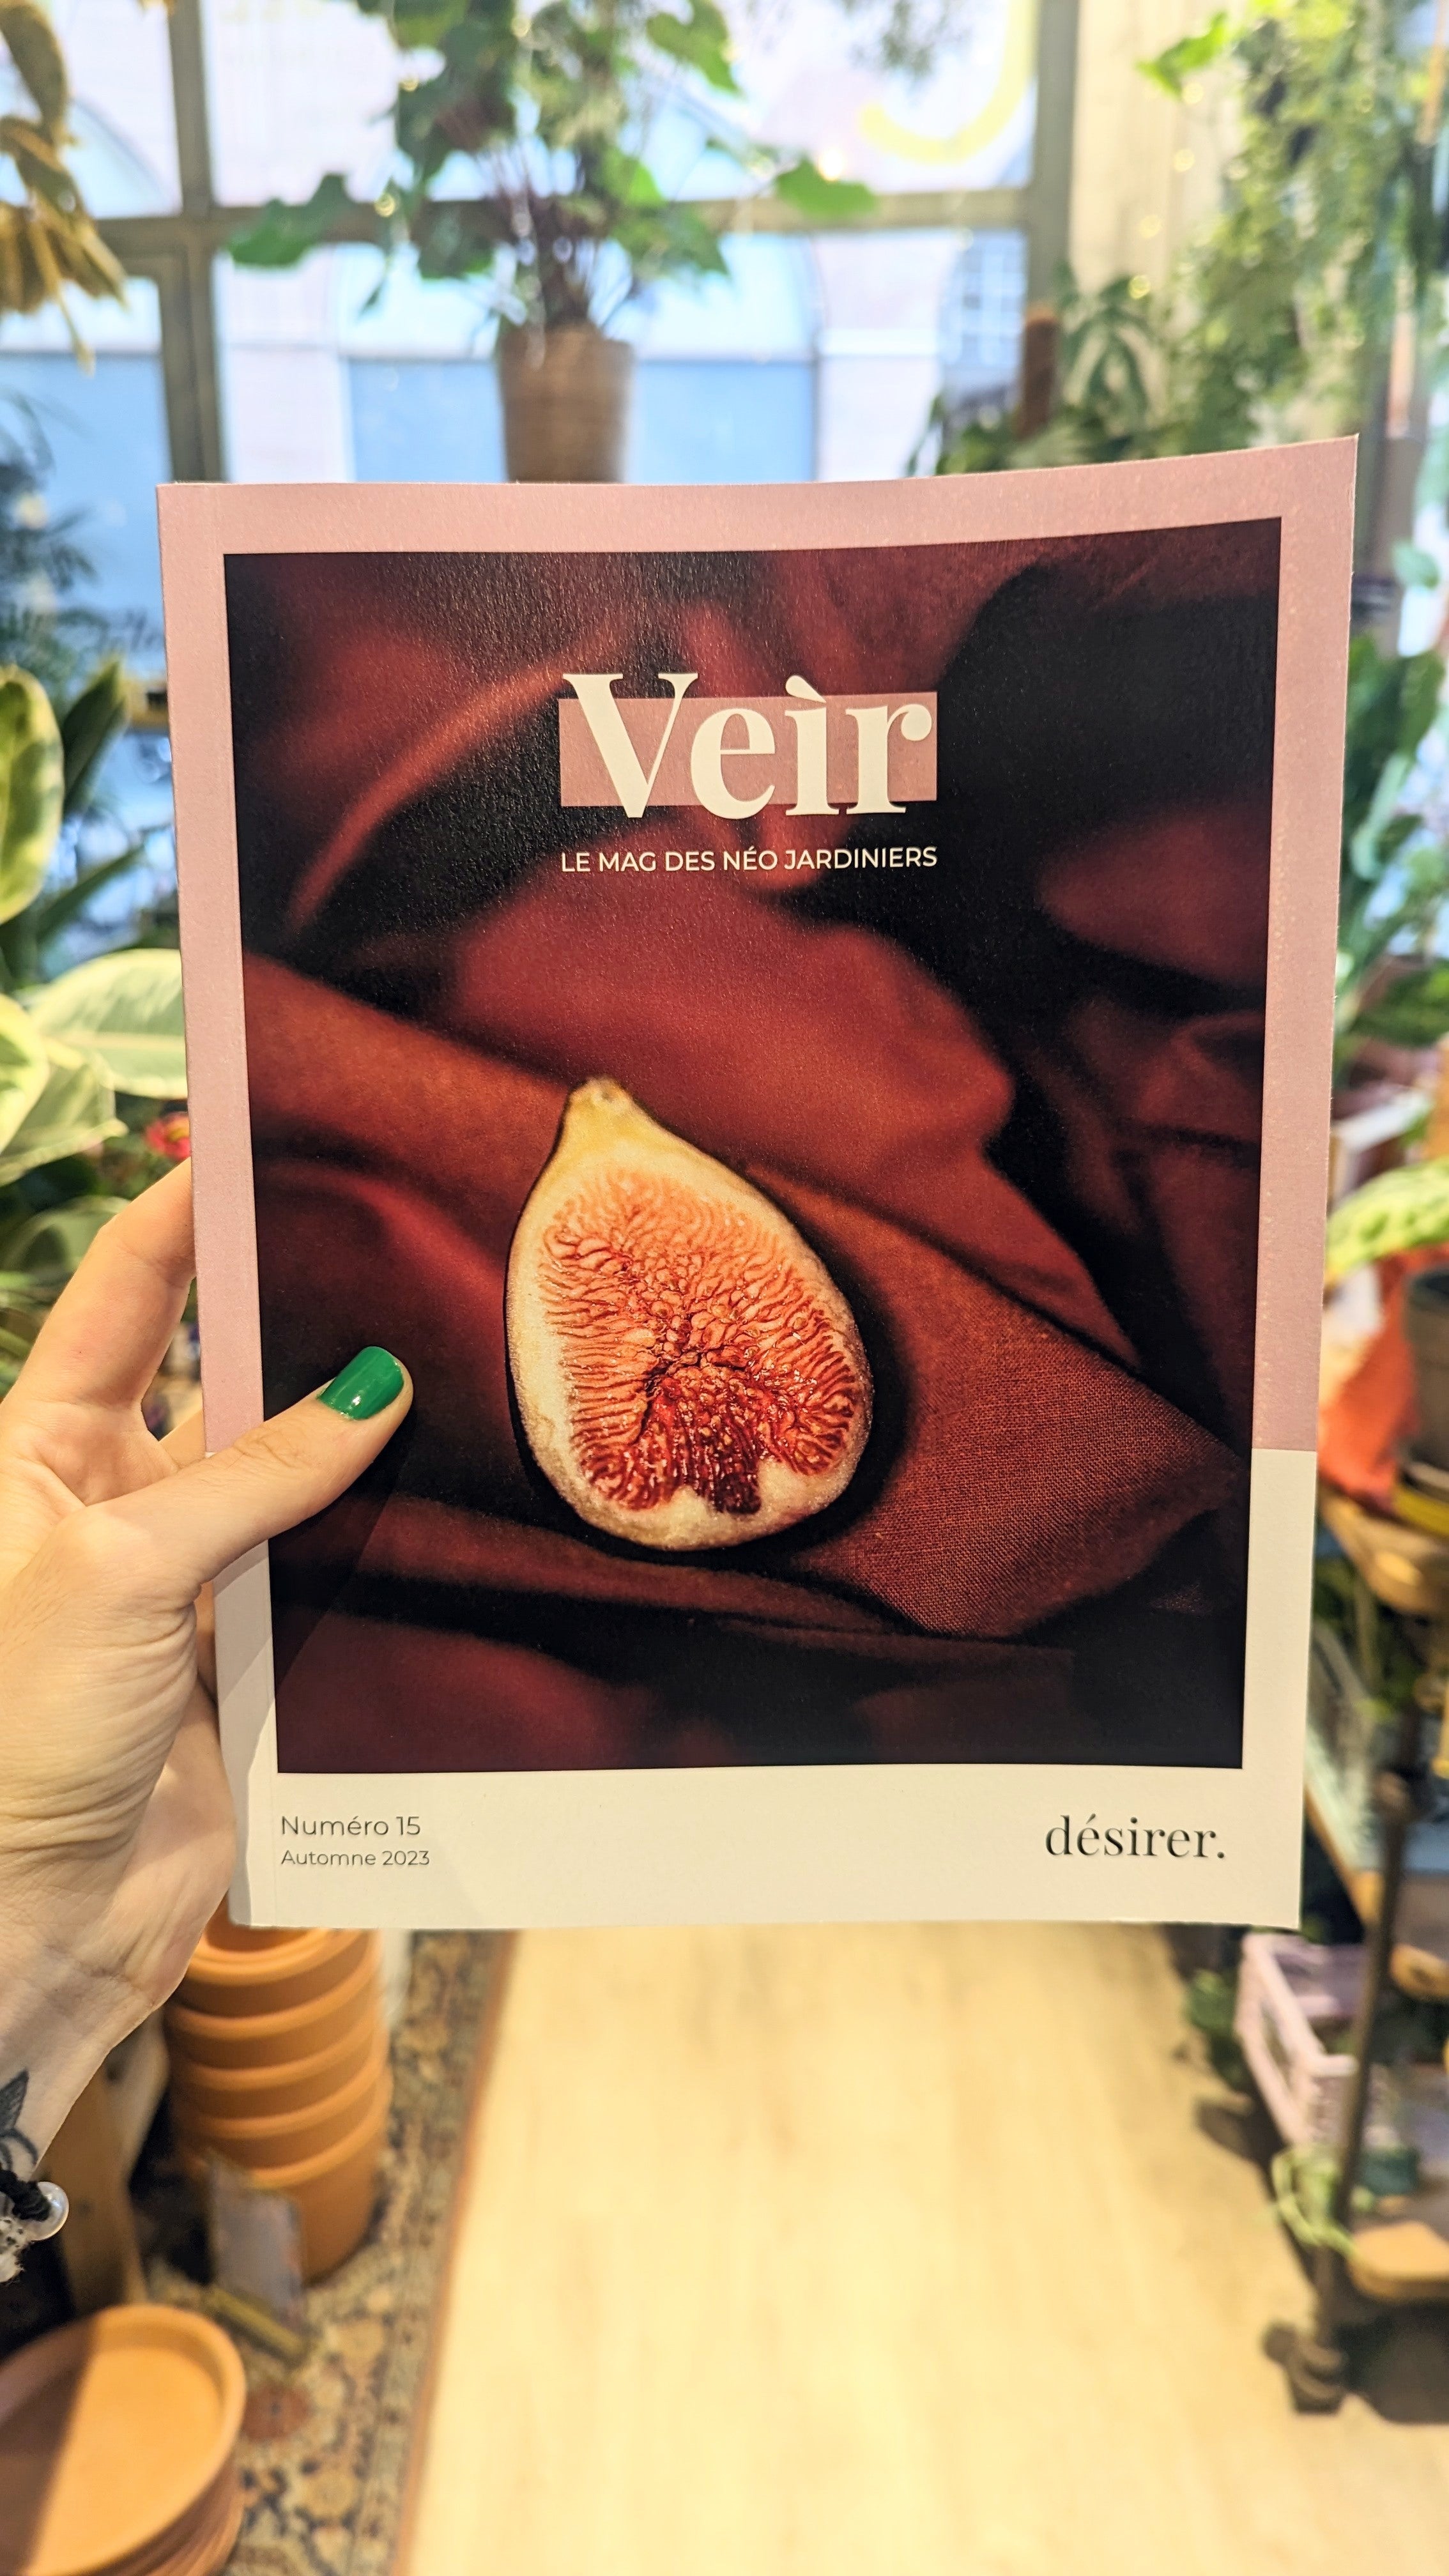 Veir magazine | Numéro 15 - Automne 2023 : Désirer.